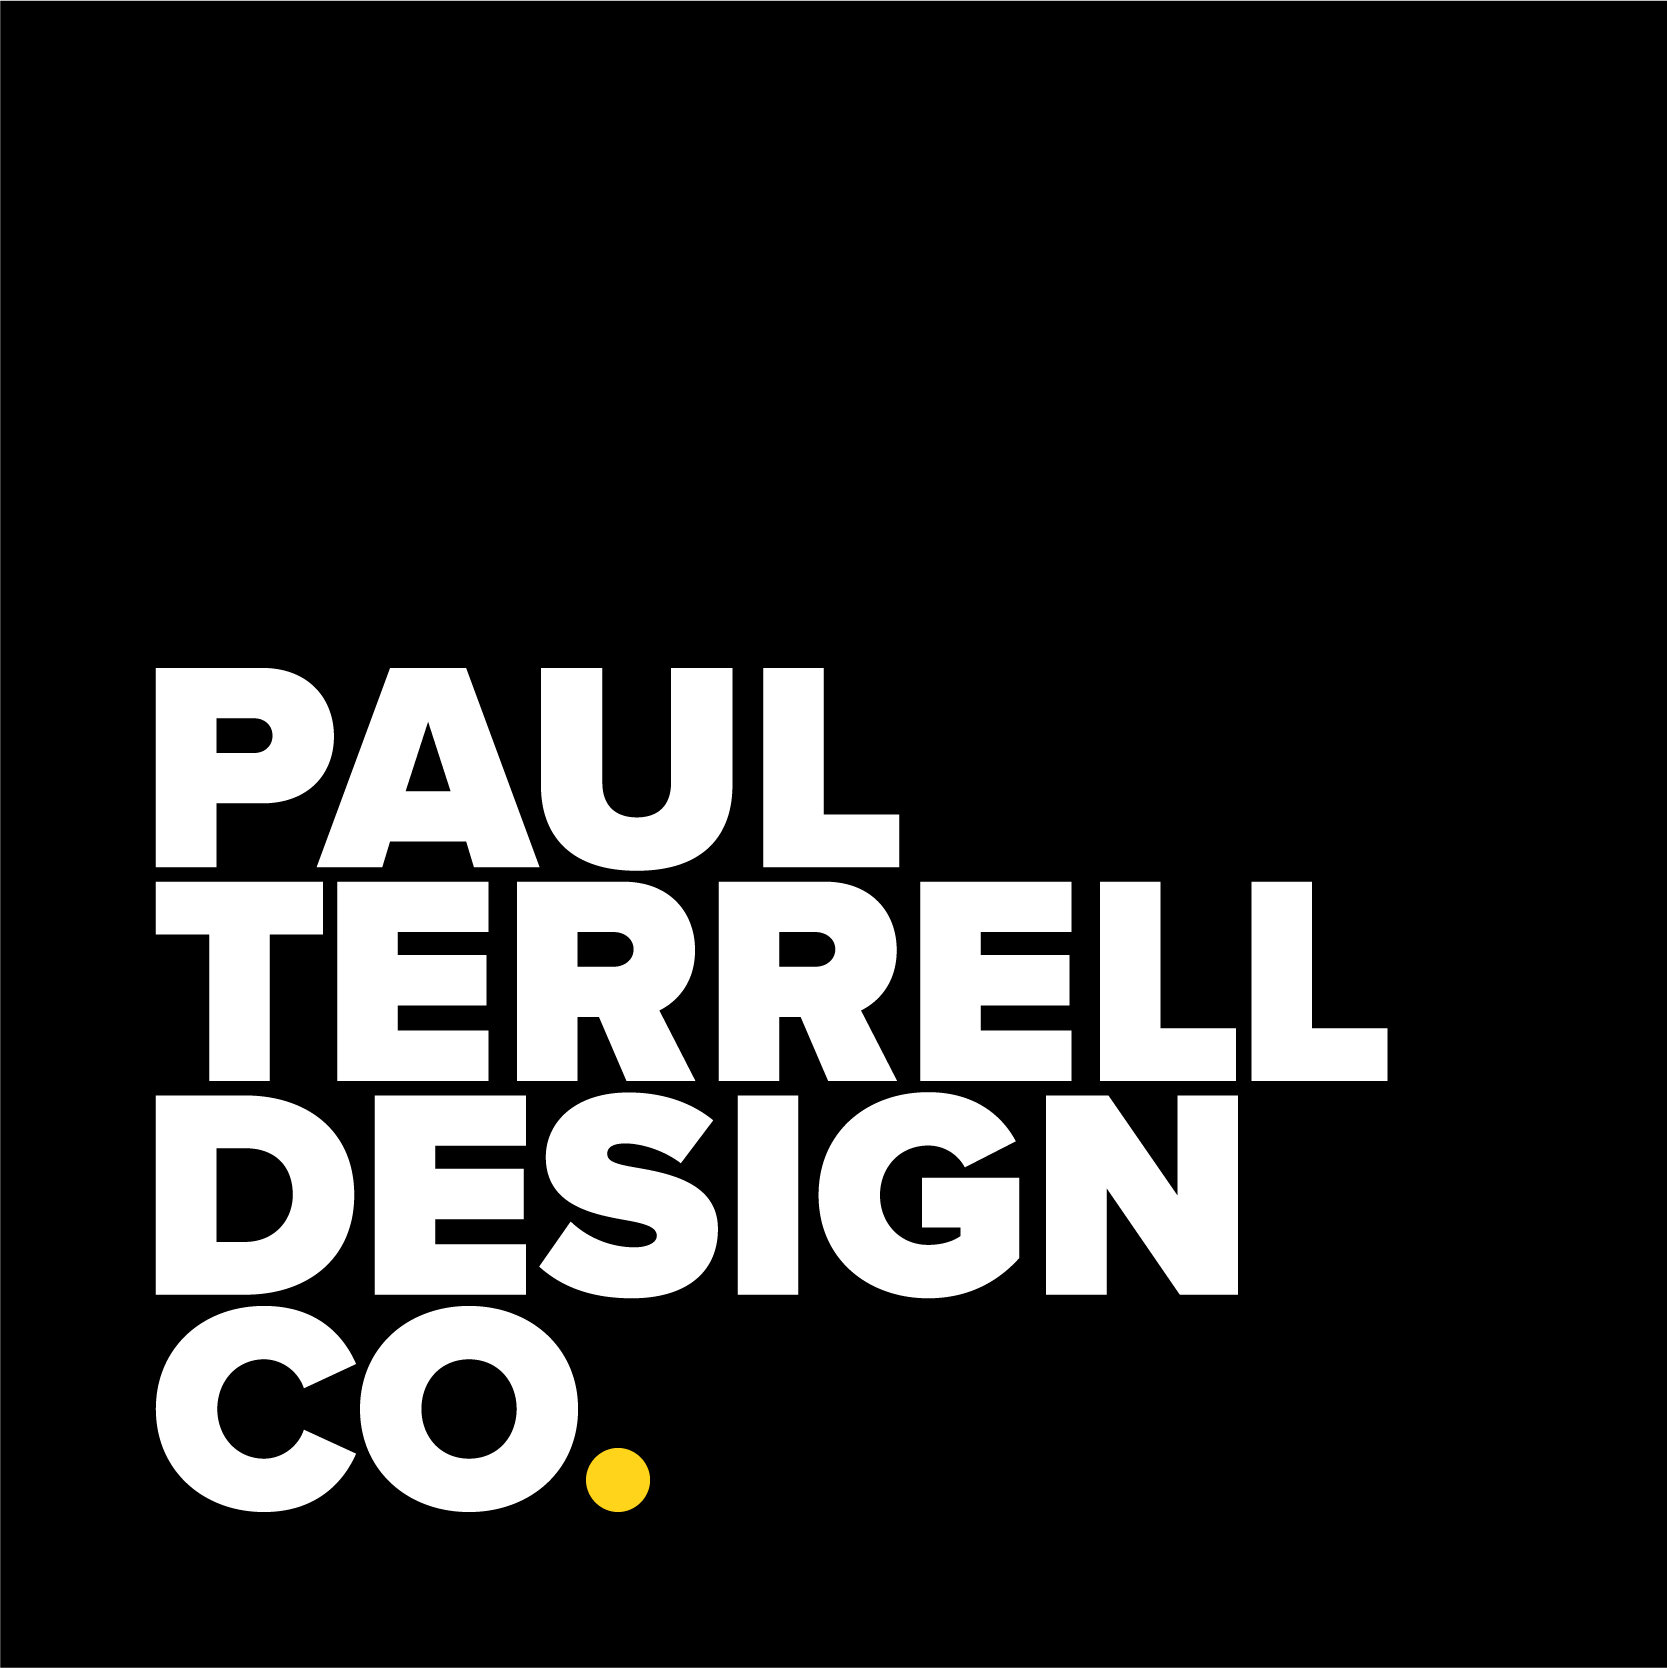 PAUL TERRELL DESIGN CO.